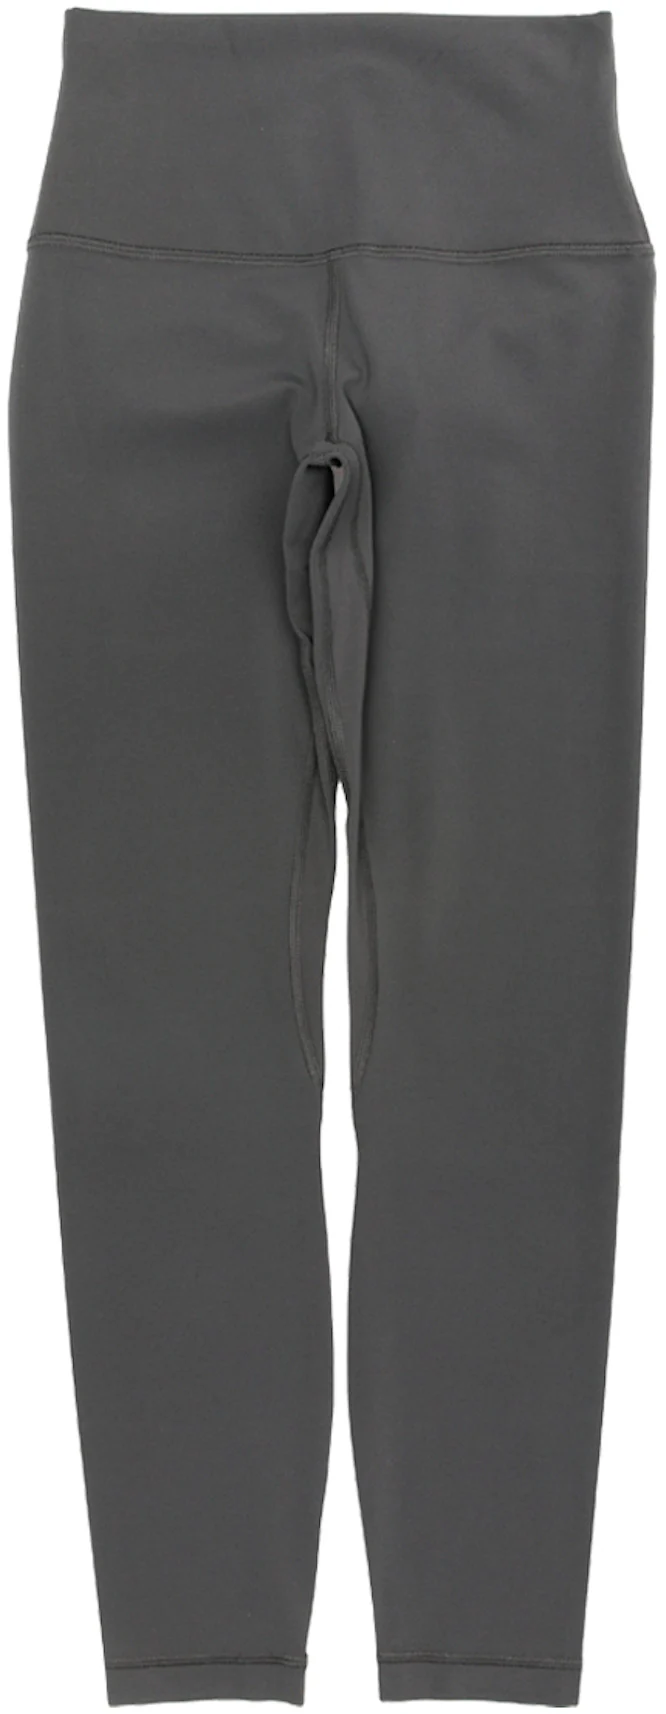 lululemon athletica, Pants & Jumpsuits, Nwt Lululemon Reveal 78 Leggings  High Rise Seamless Cutout Size 6 Graphite Grey